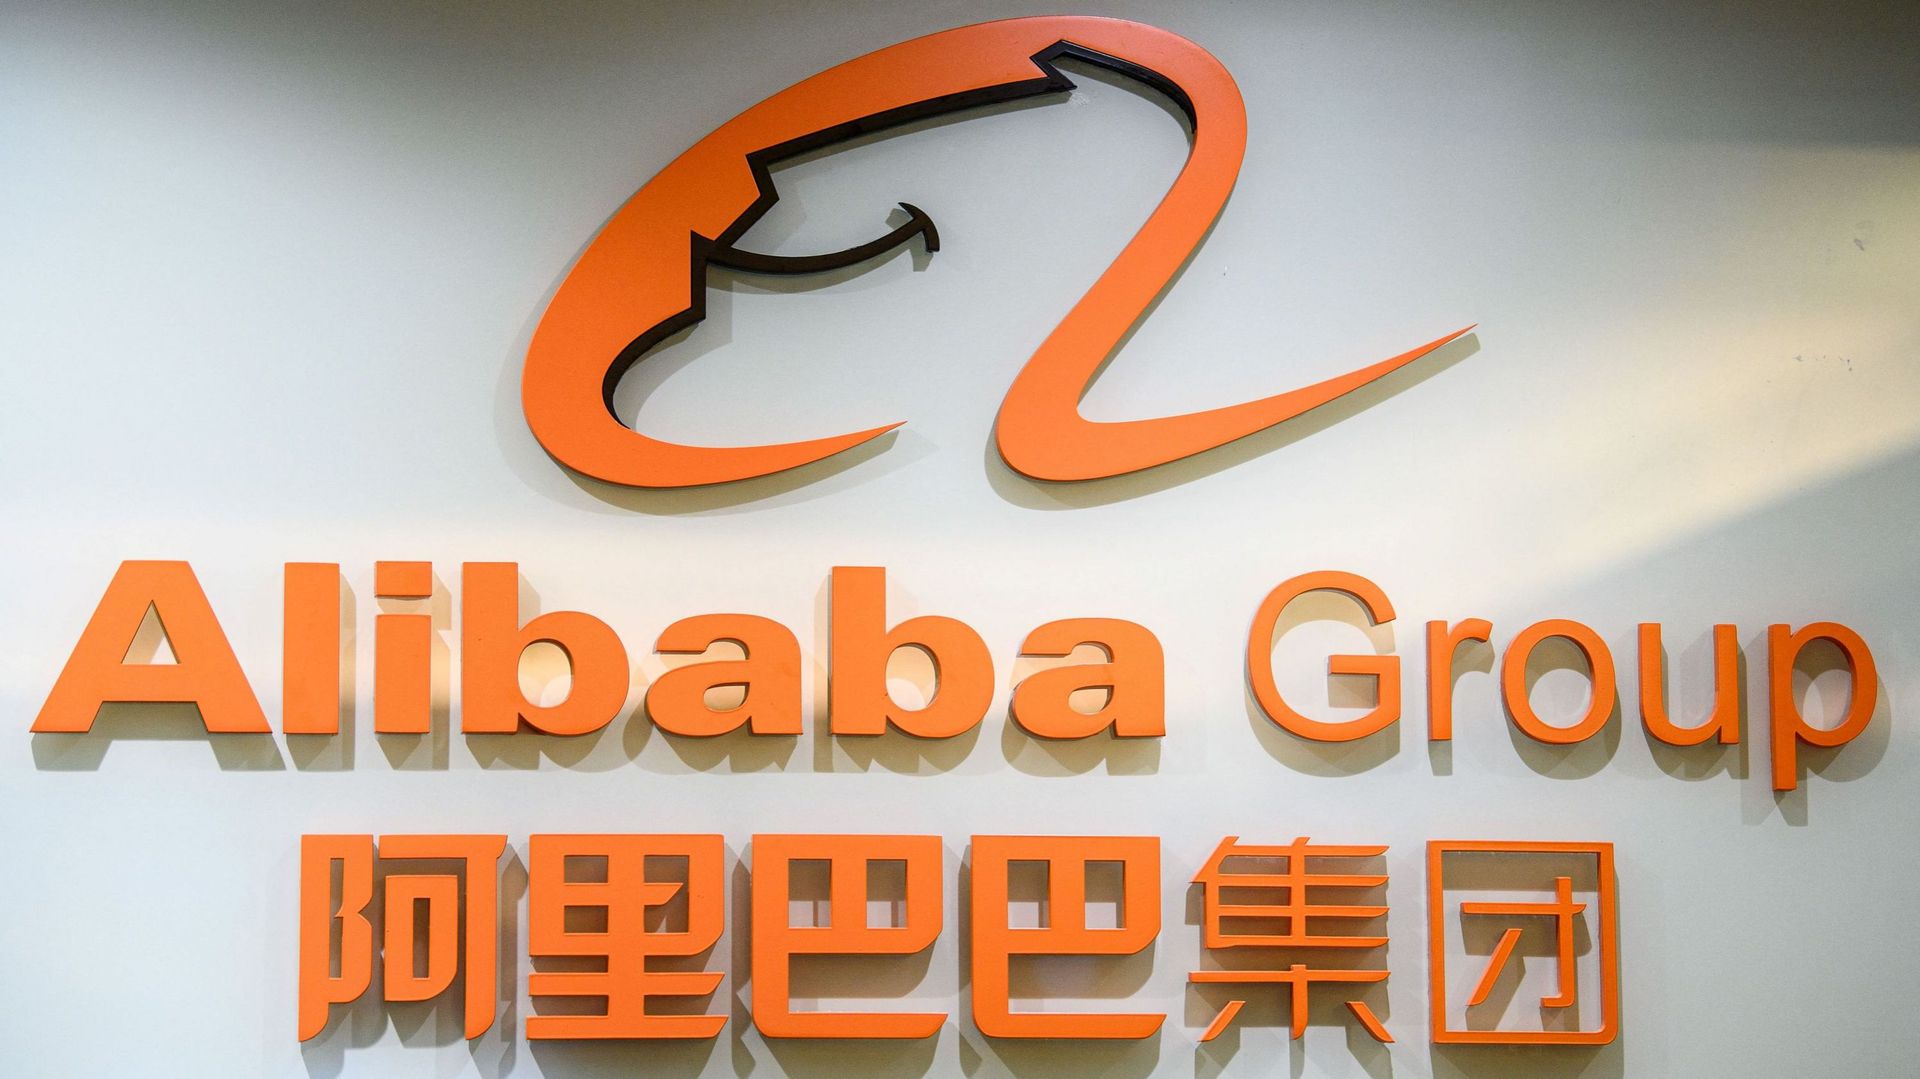 Alibaba risque une amende record en Chine, selon le Wall Street Journal